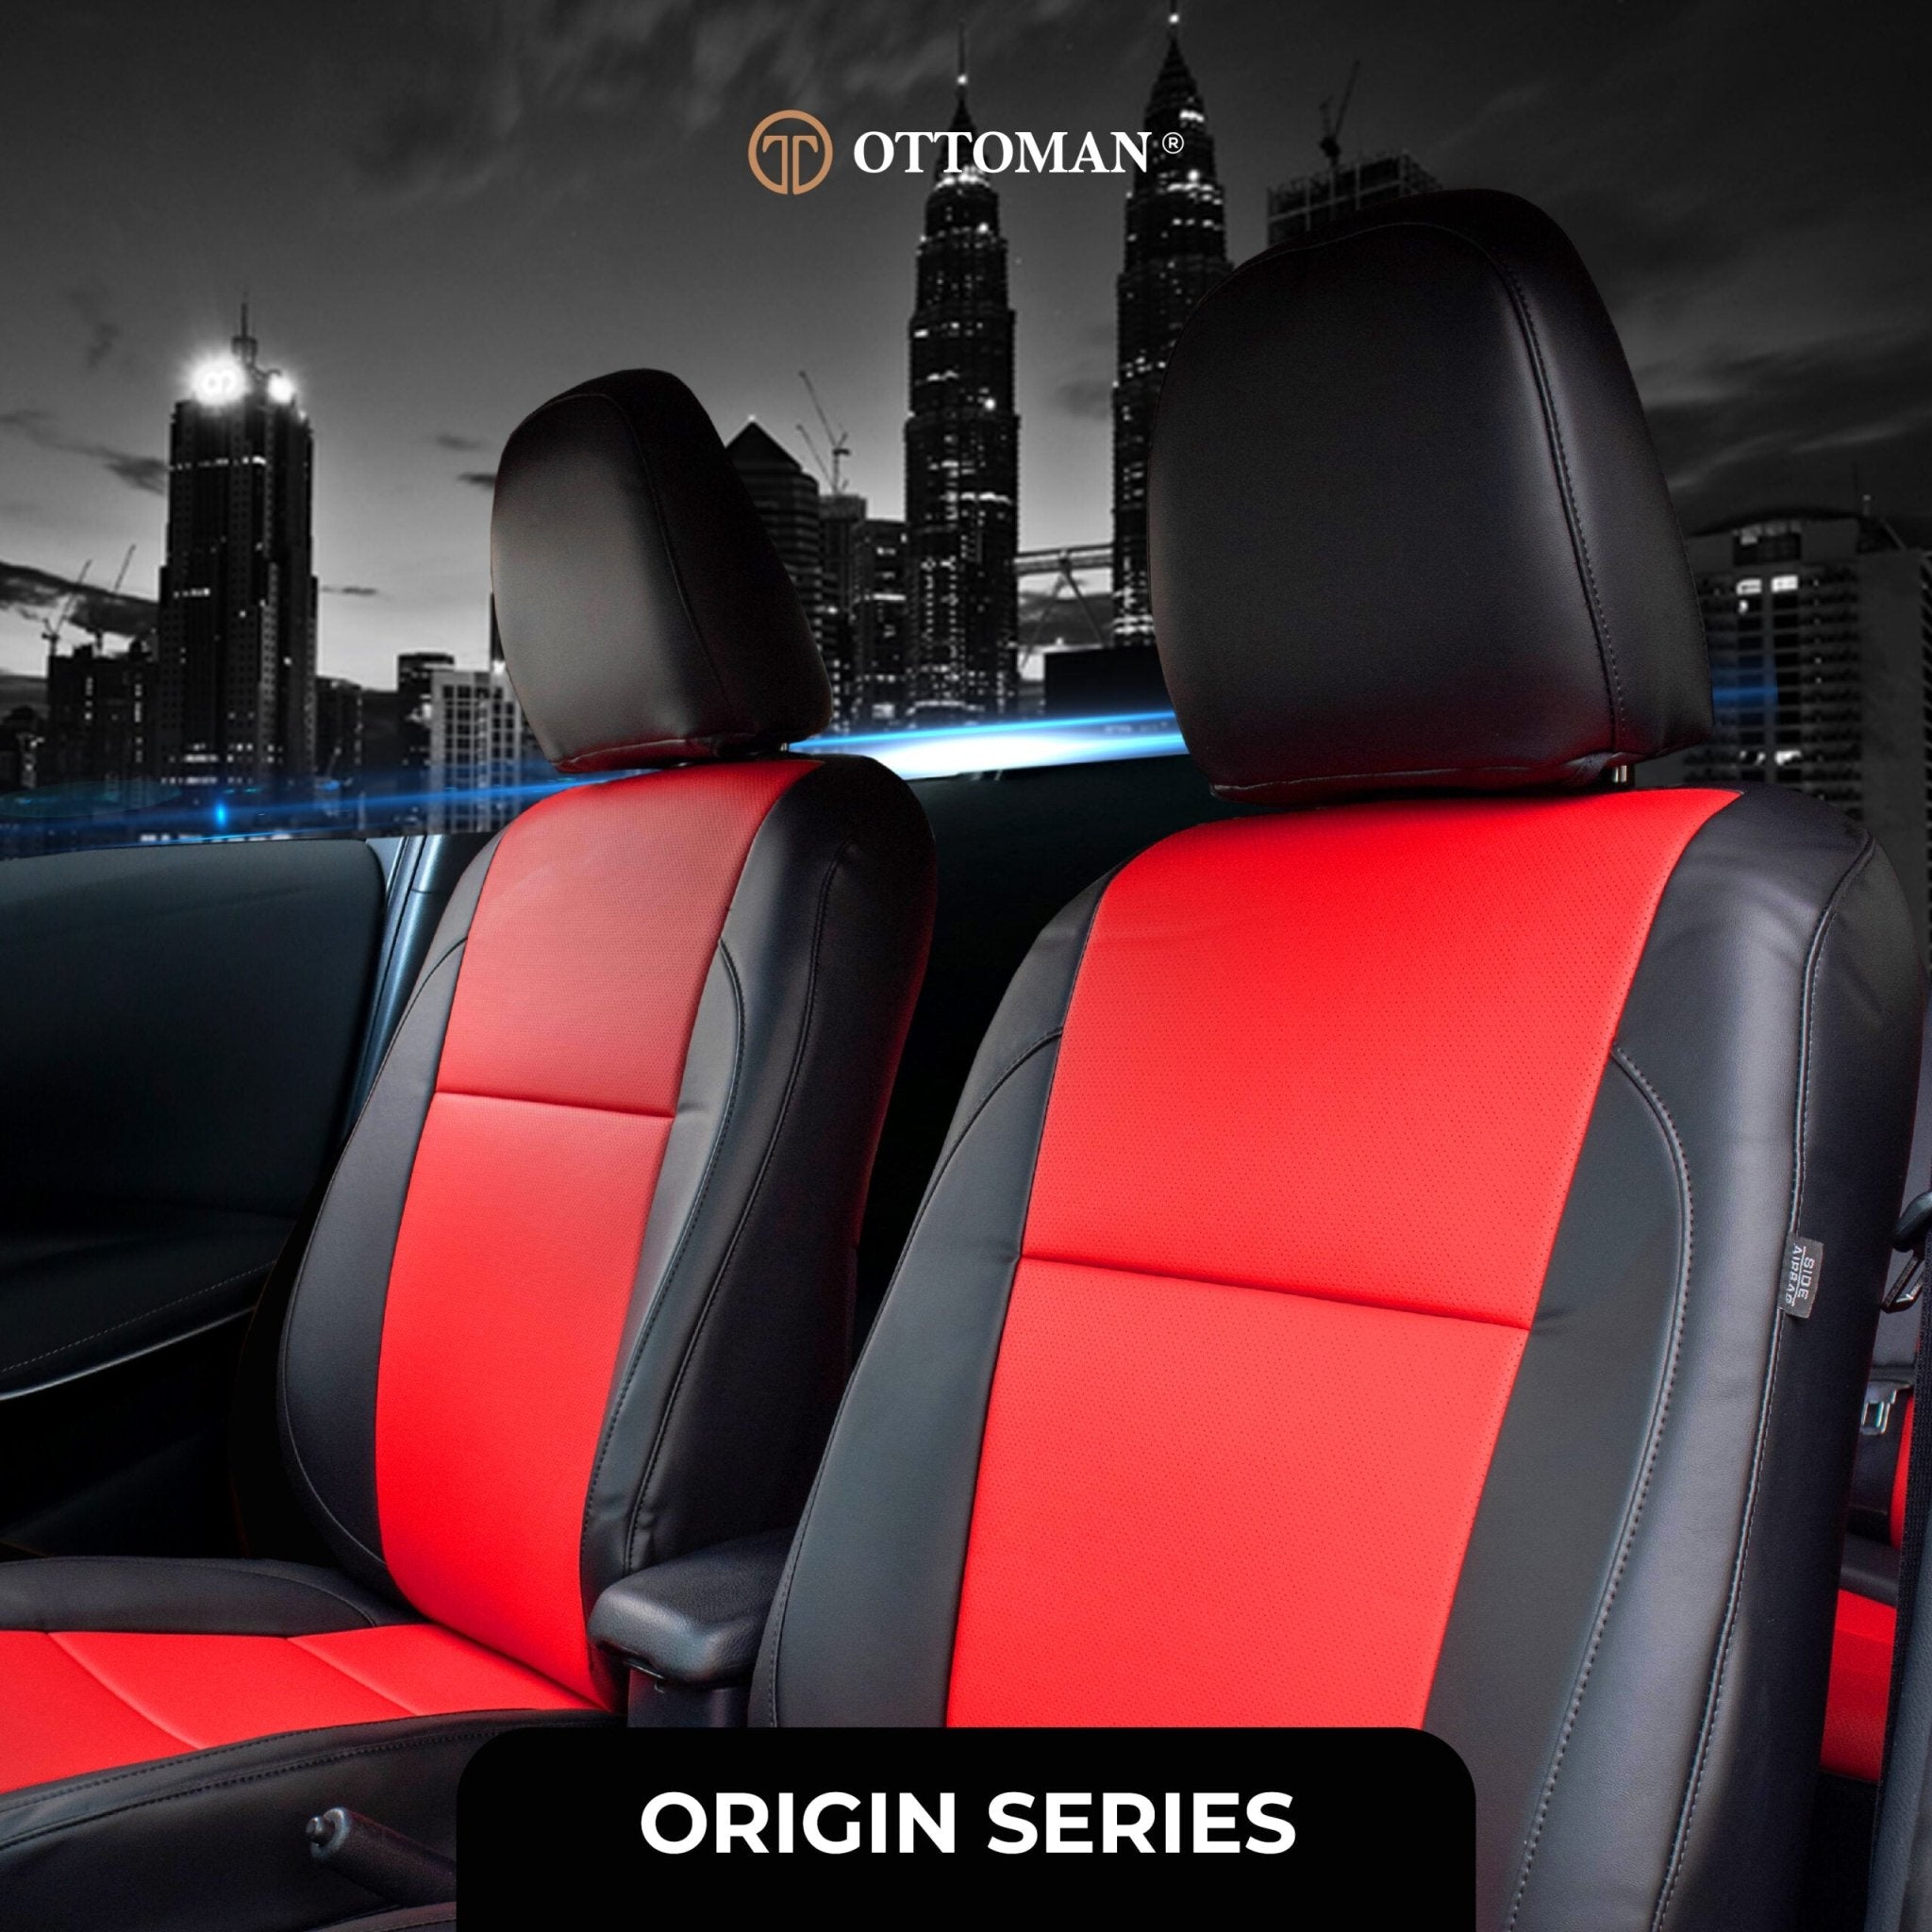 Toyota Rush (2006-2017) Ottoman Seat Cover Seat Cover in Klang Selangor, Penang, Johor Bahru - Ottoman Car Mats